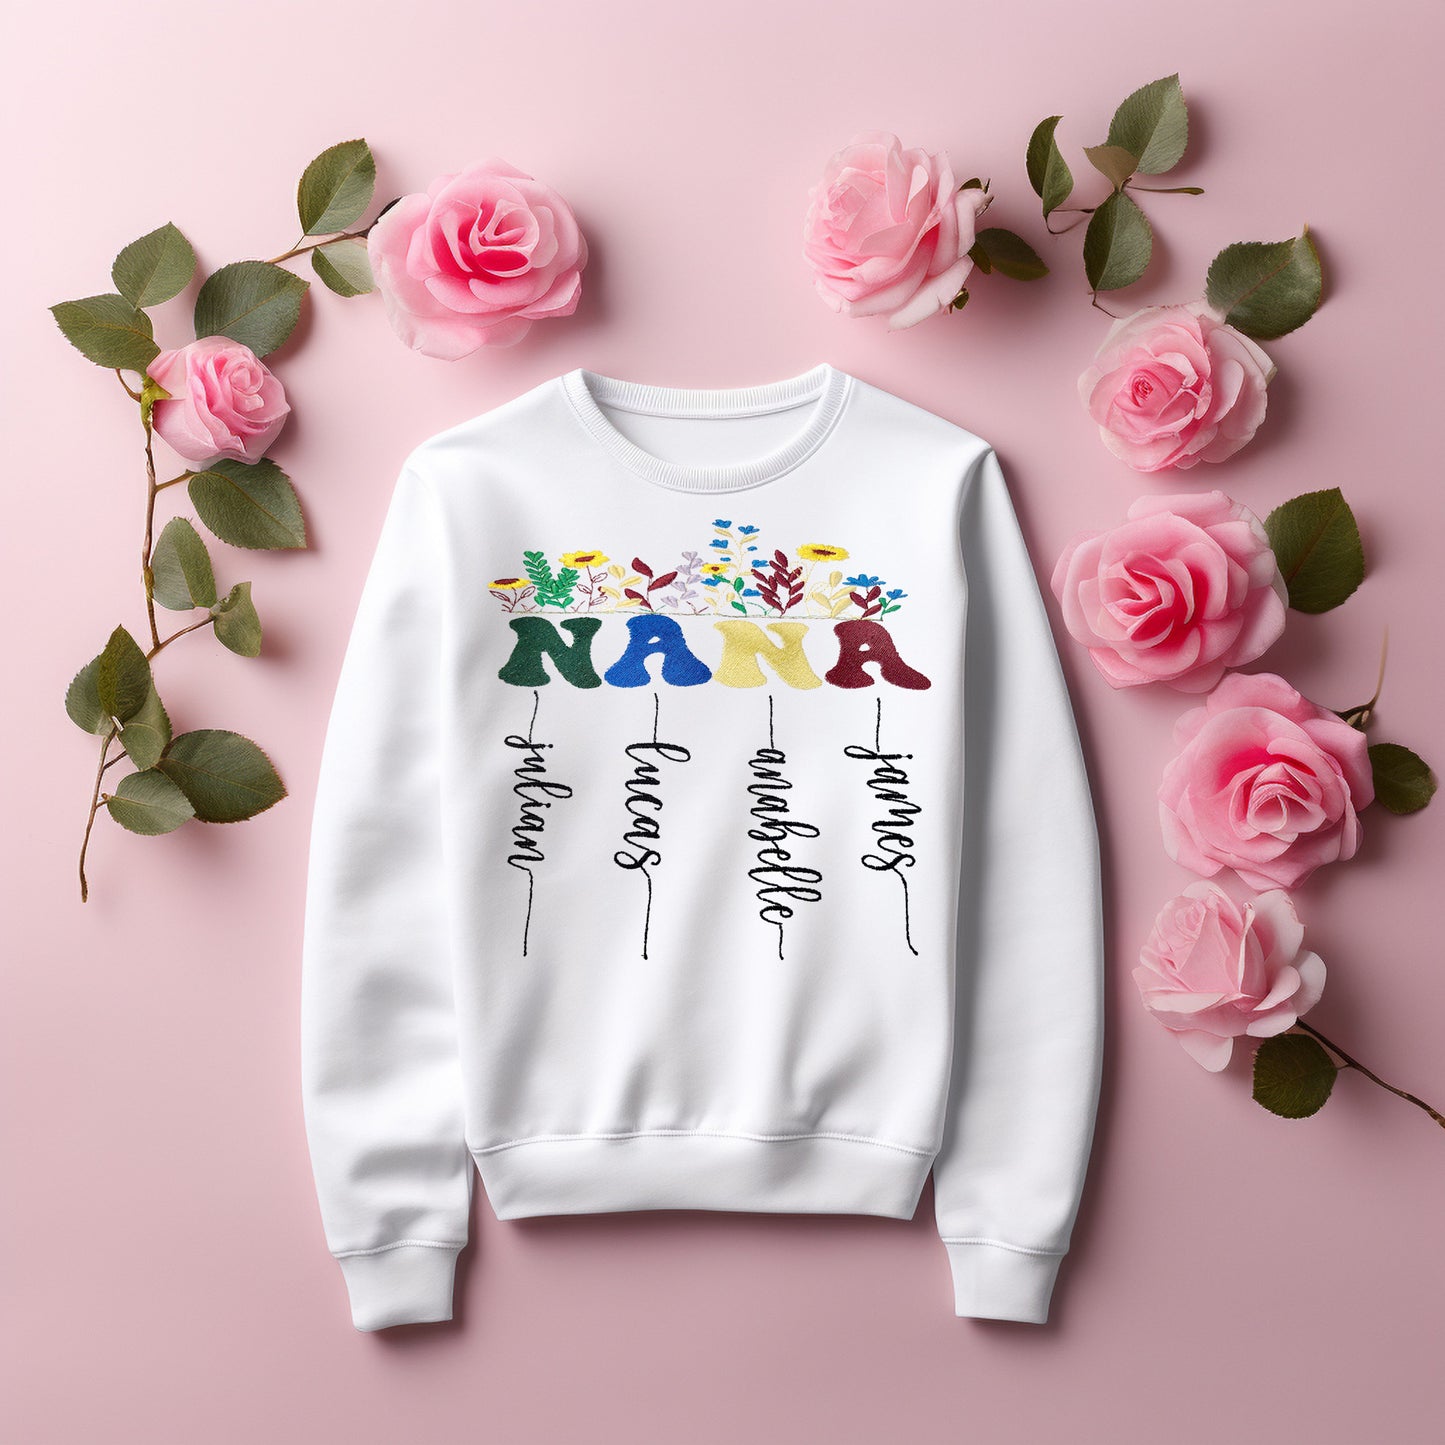 Nana Sweatshirt, Warm Grandma's heart with personalized love! Our Grandma's  garden Shirt with kid's names – a cherished keepsake.